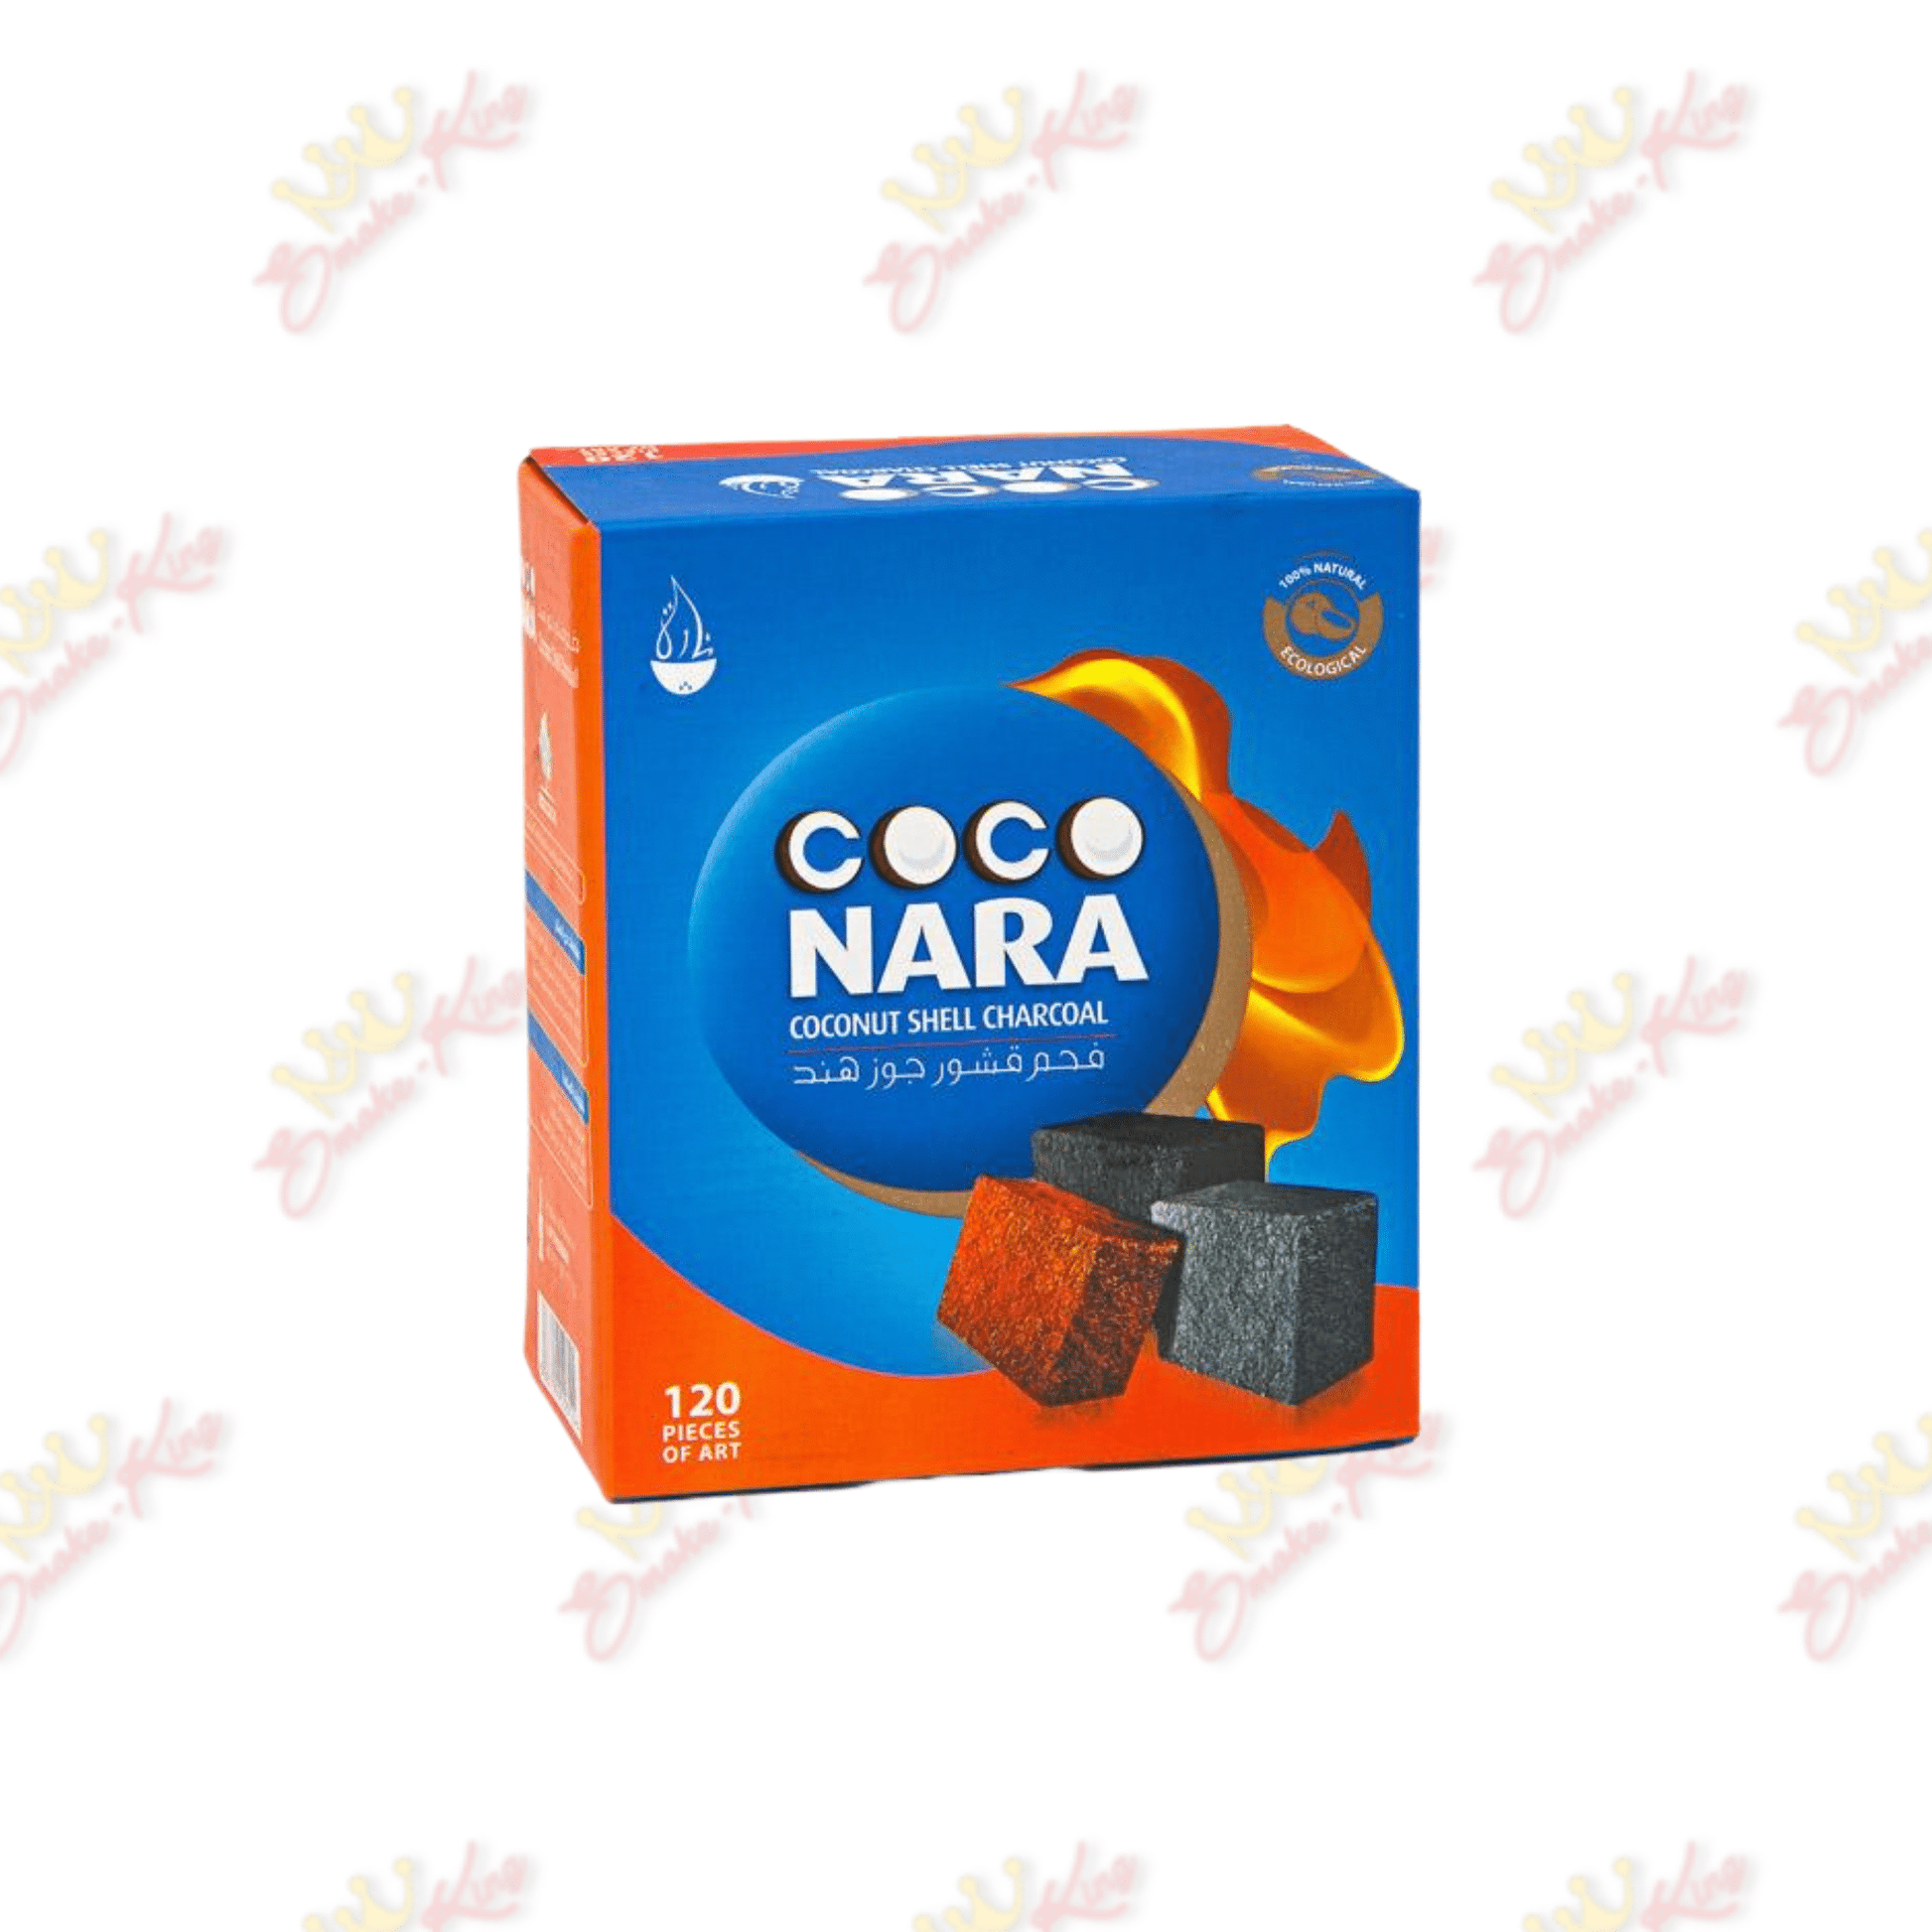 Smoke-king charcoal Coco Nara Charcoal